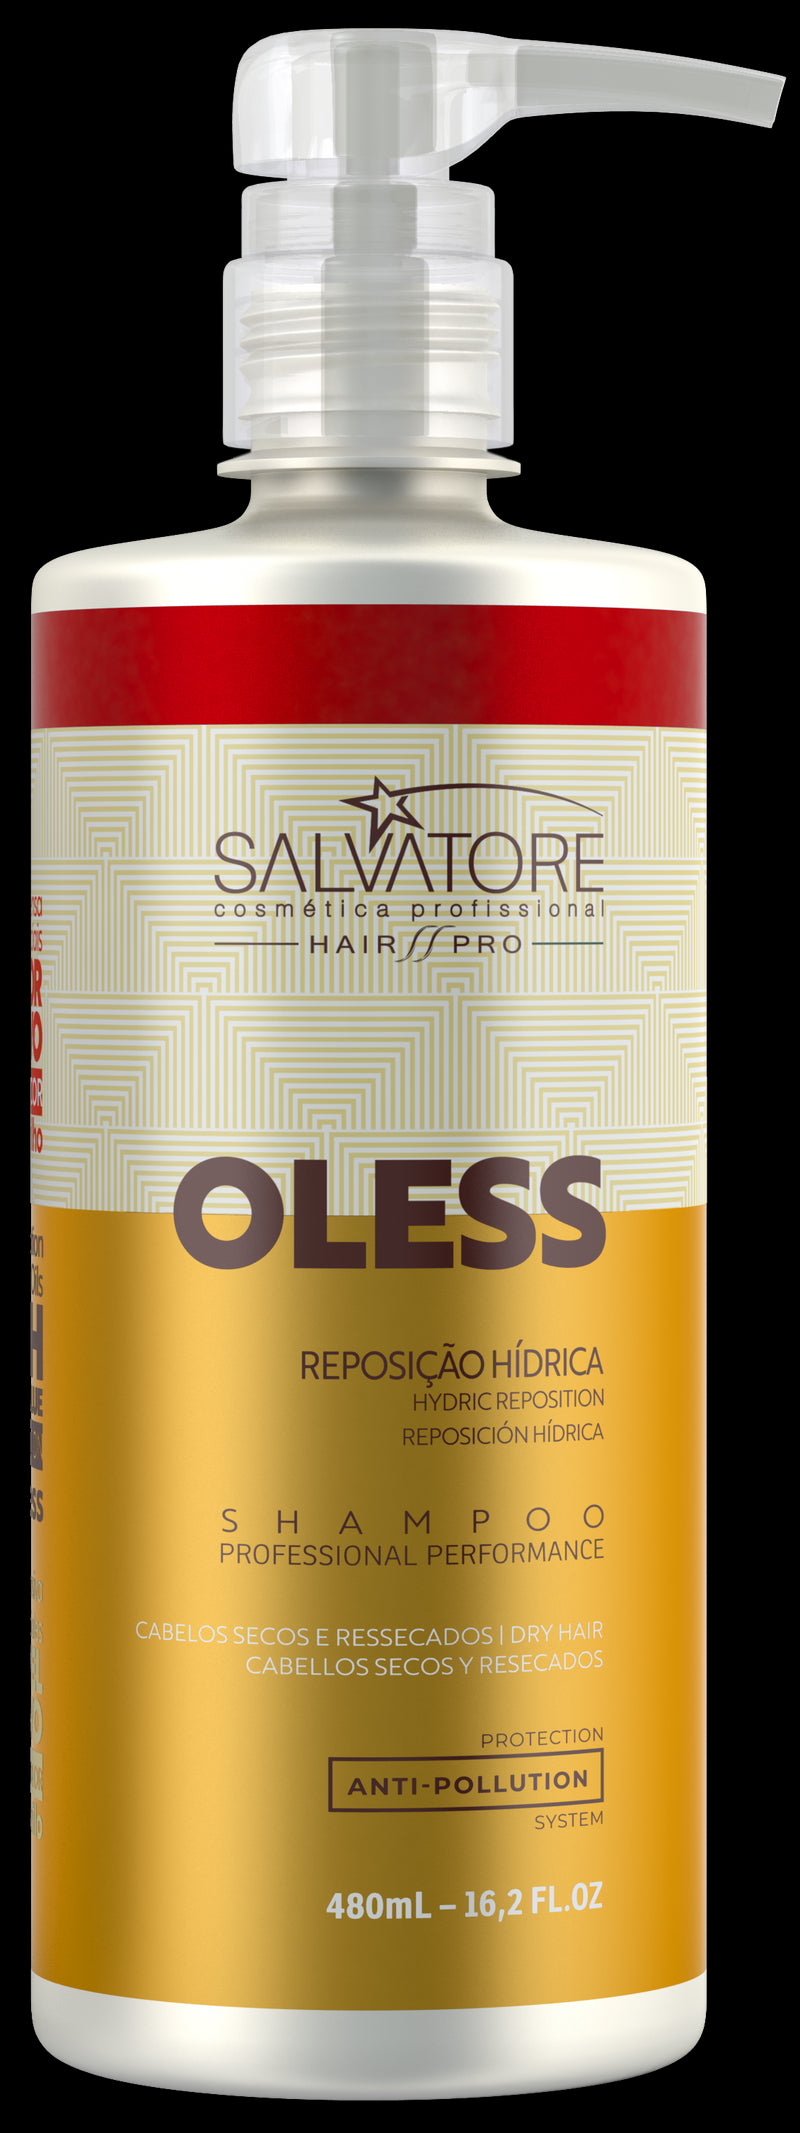 Salvatore Oless Shampoo (480ml/16.2oz)